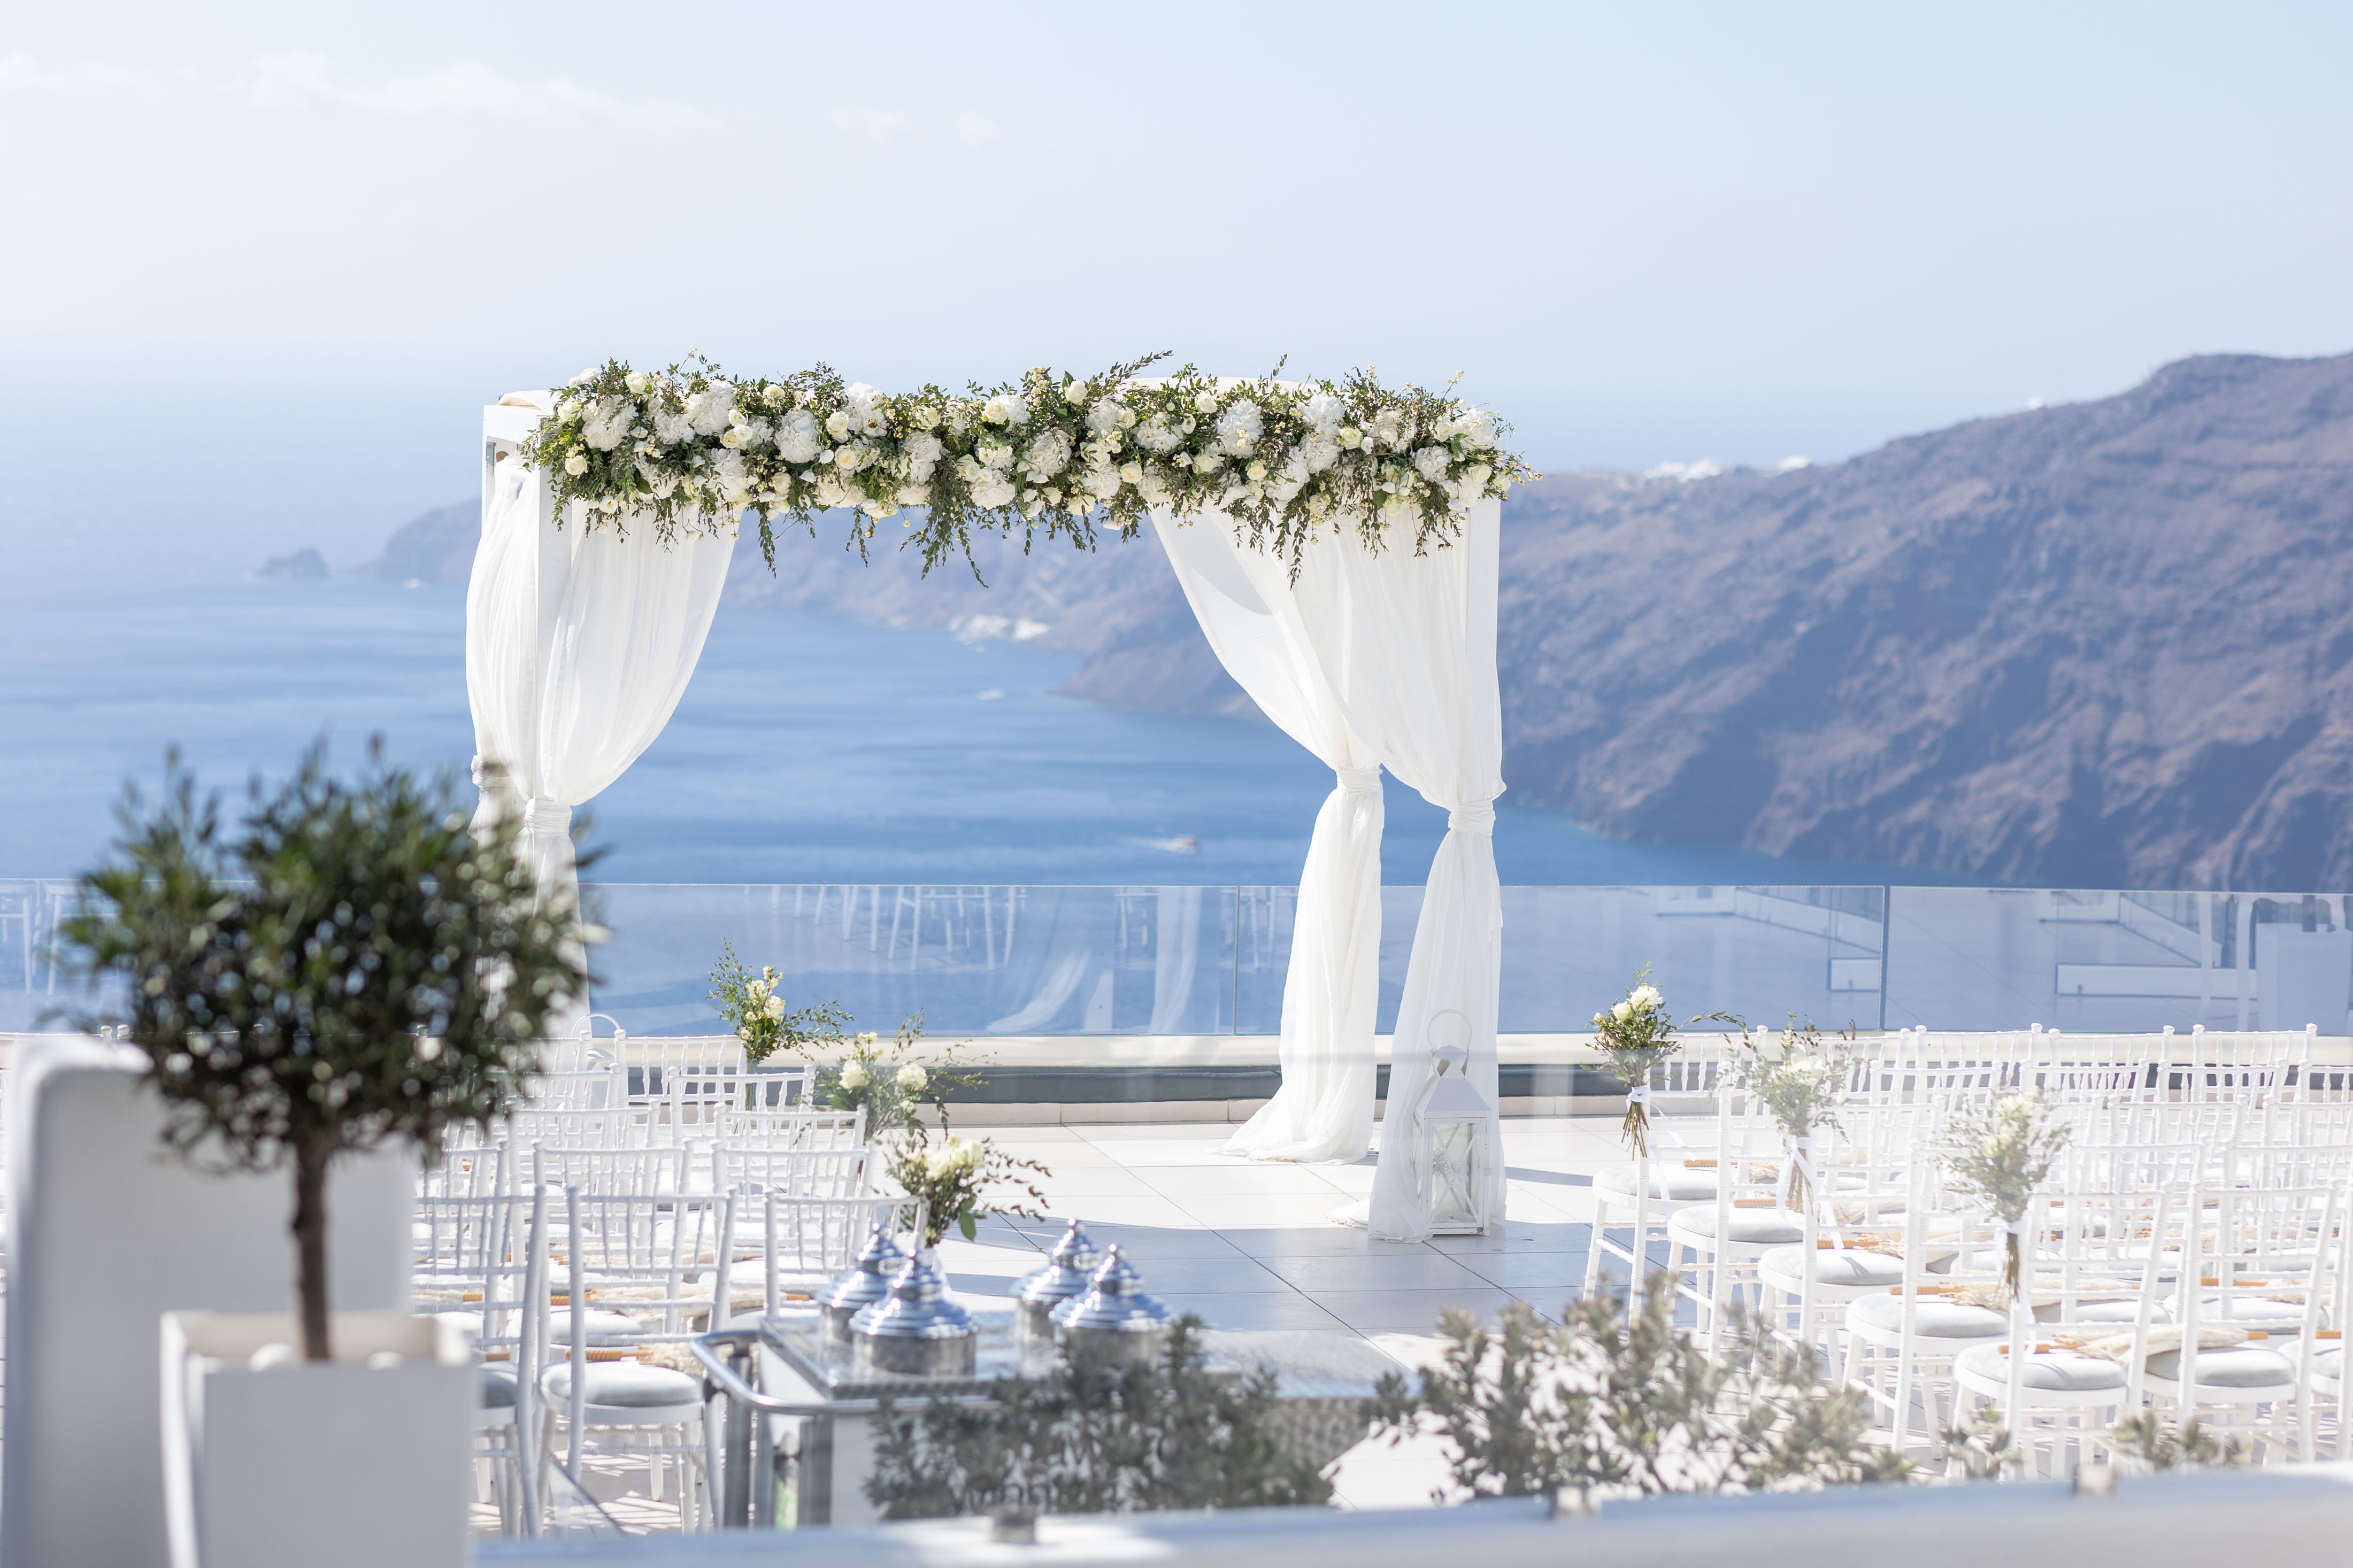 ceremony space set up at Le Ciel in Santorini